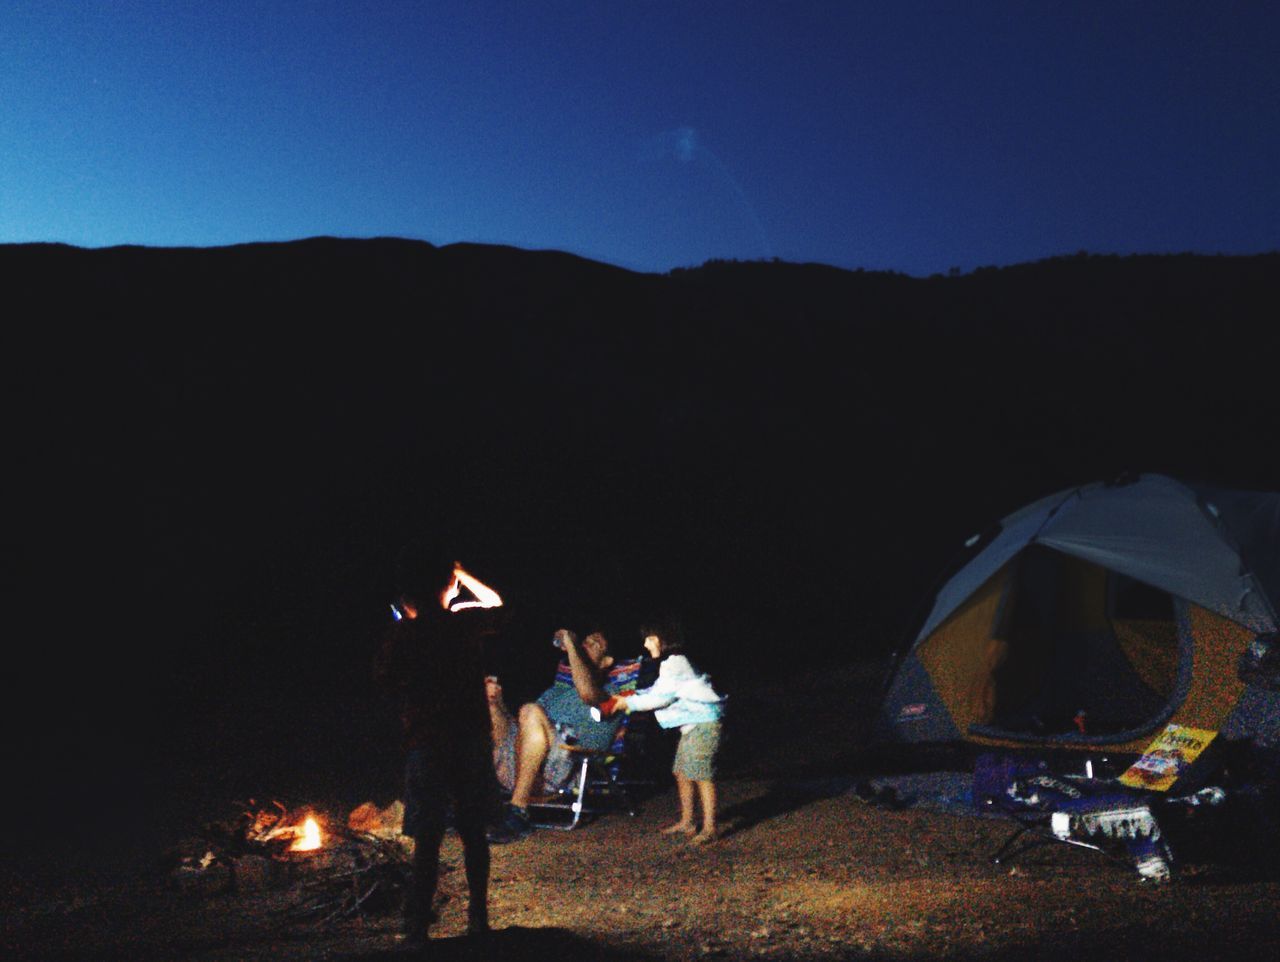 La jolla reservation campground